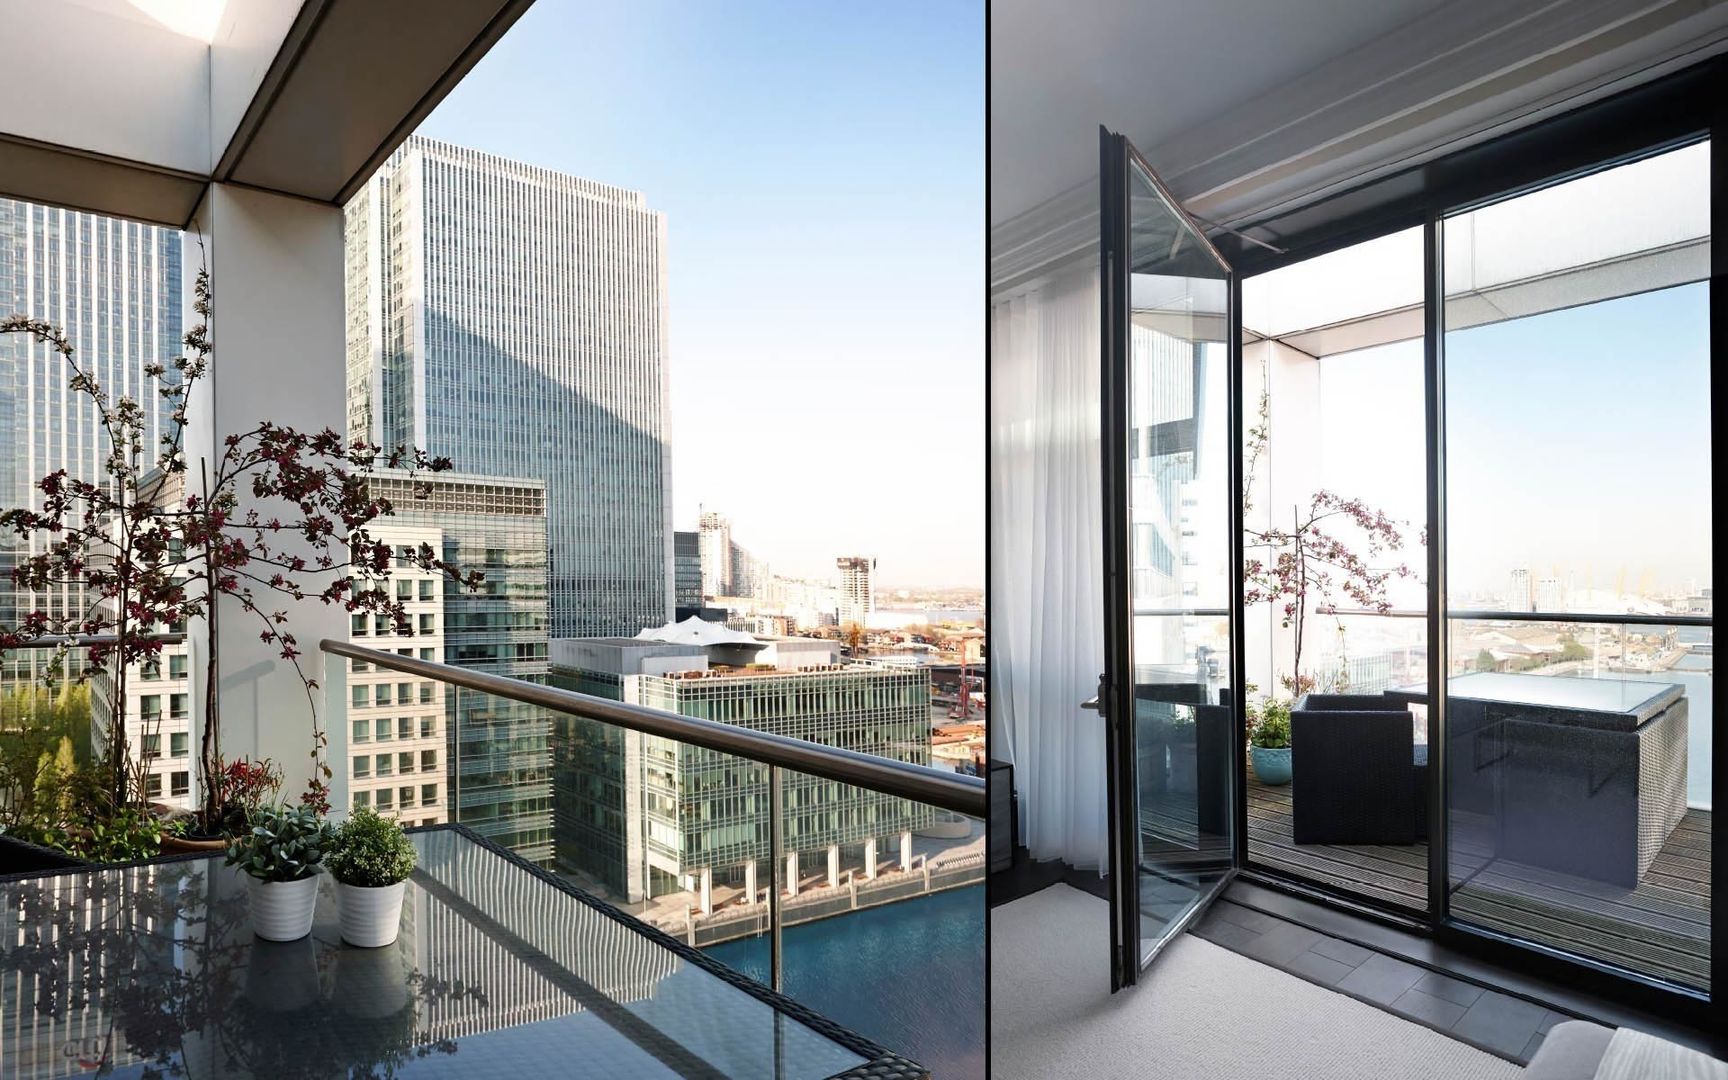 Luxury Penthouse Apartment: Discovery Dock, Boscolo Boscolo Balcones y terrazas modernos Accesorios y decoración